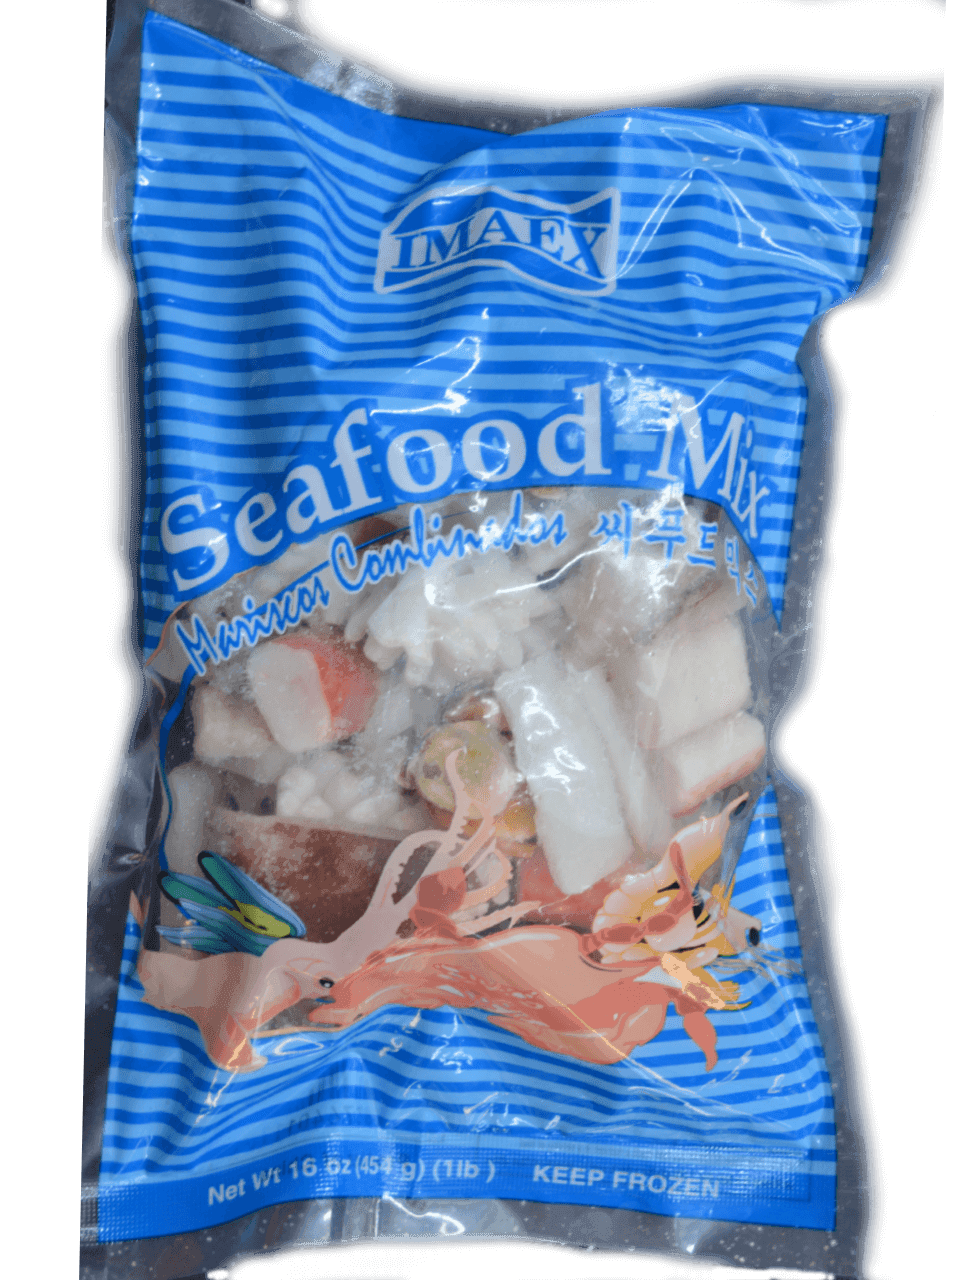 Imaex - Seafood Mix 16oz